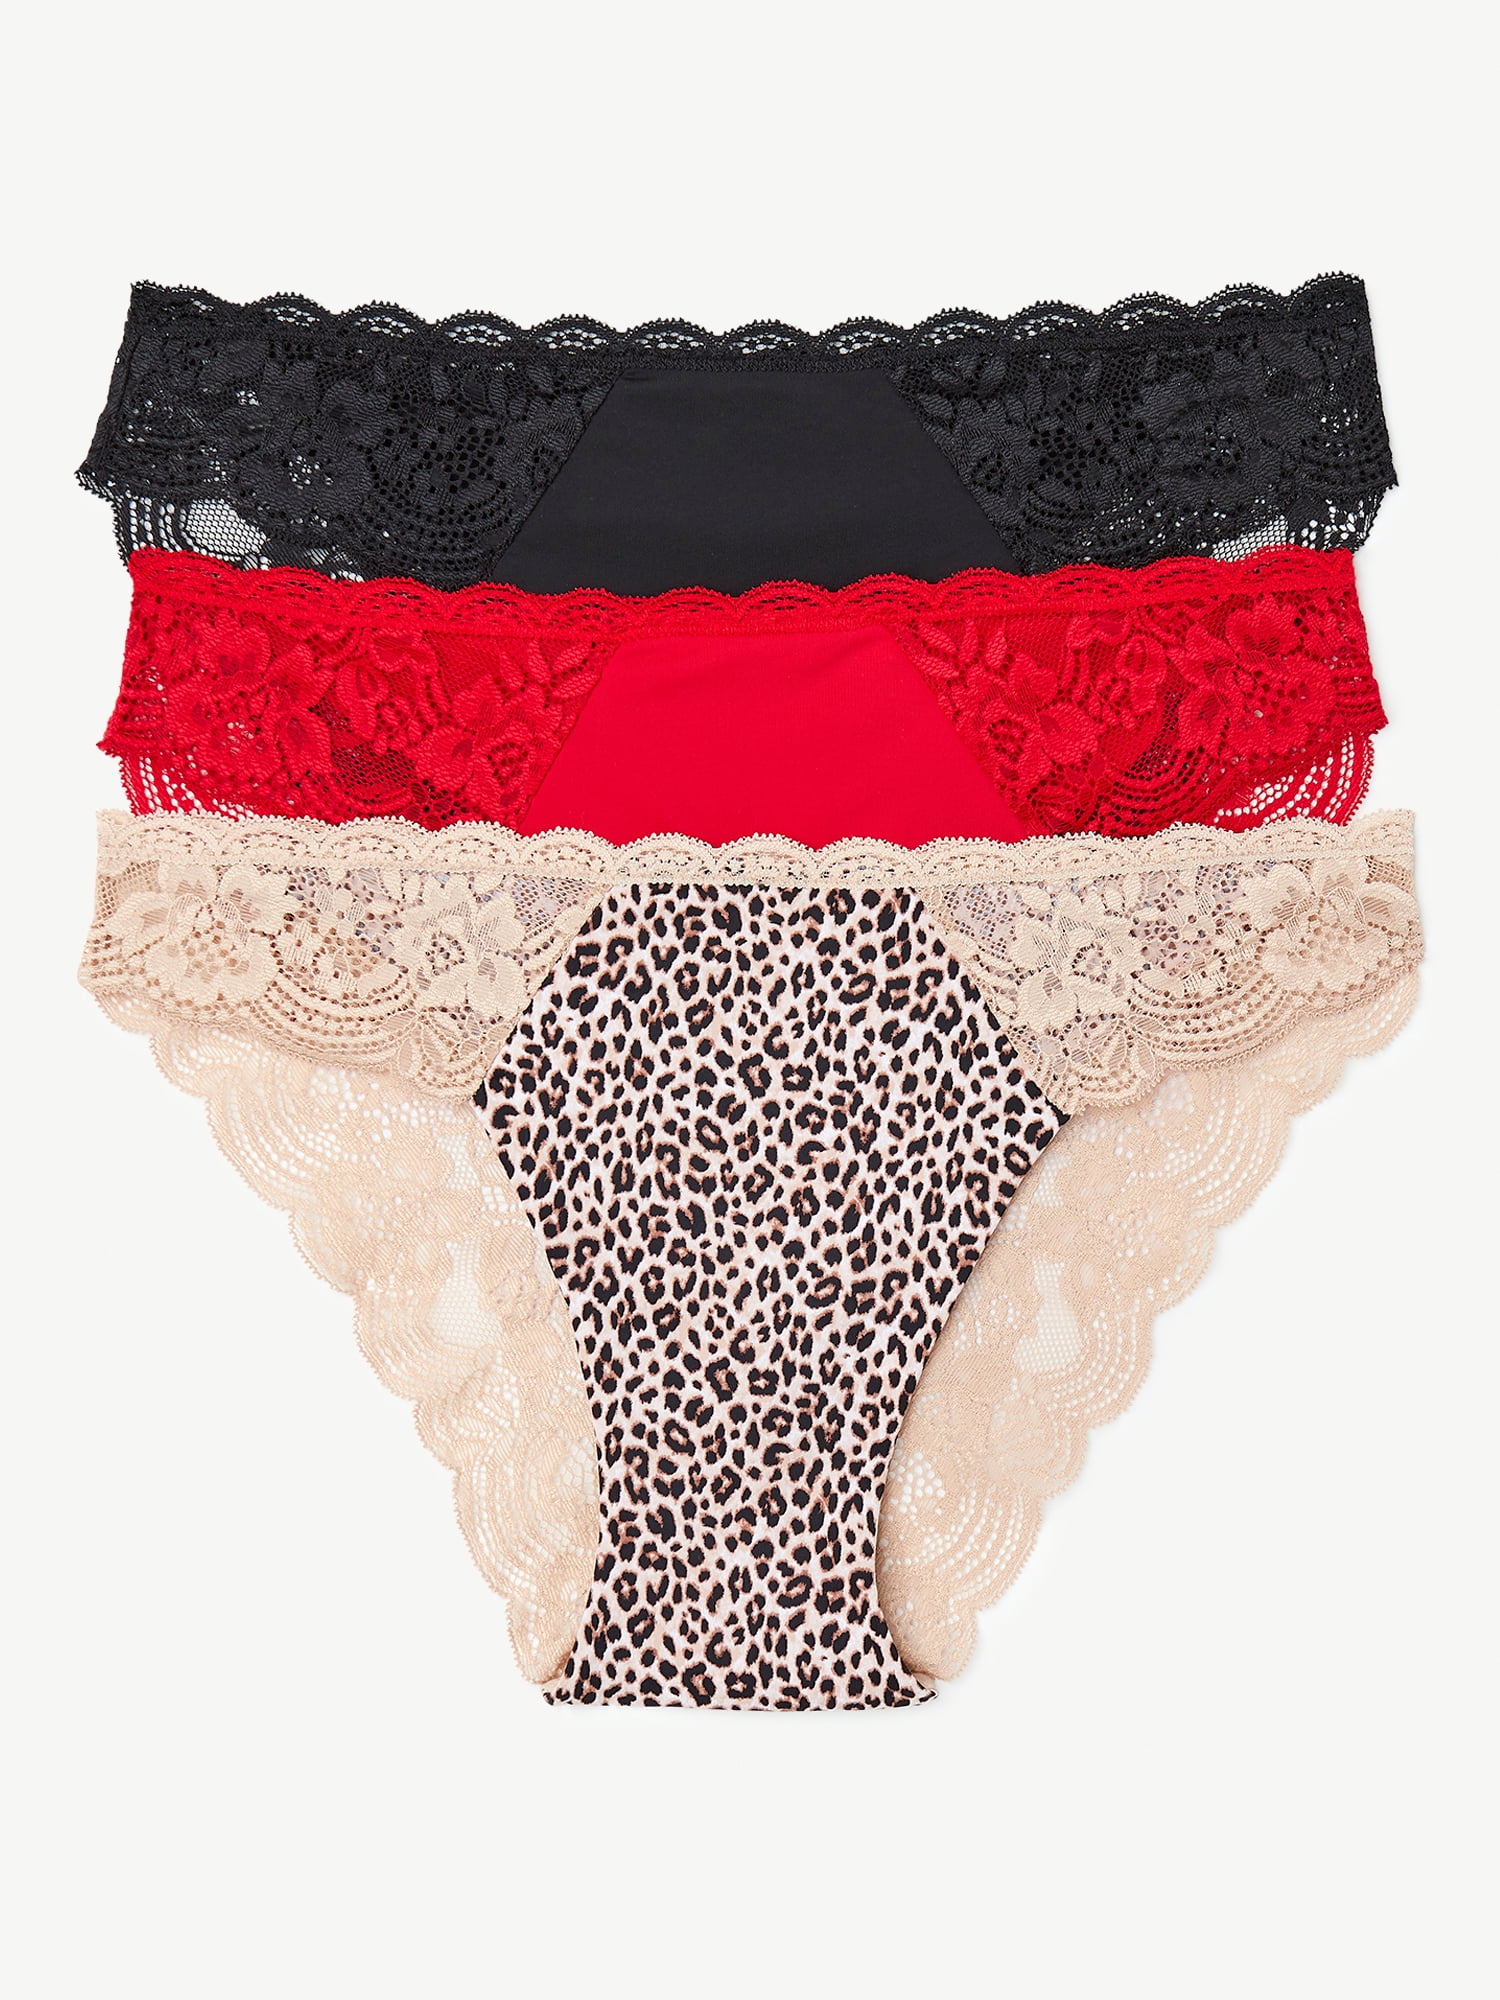 Joyspun Women's Microfiber and Lace Cheeky Panties, 3-Pack, Sizes XS to 3XL